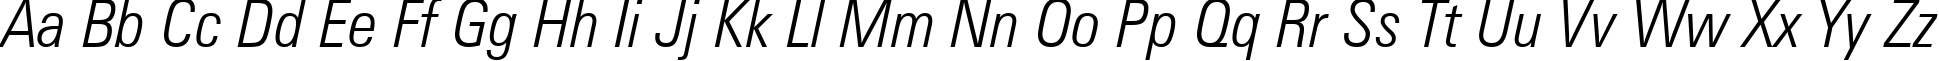 Пример написания английского алфавита шрифтом Zurich Light Condensed Italic BT